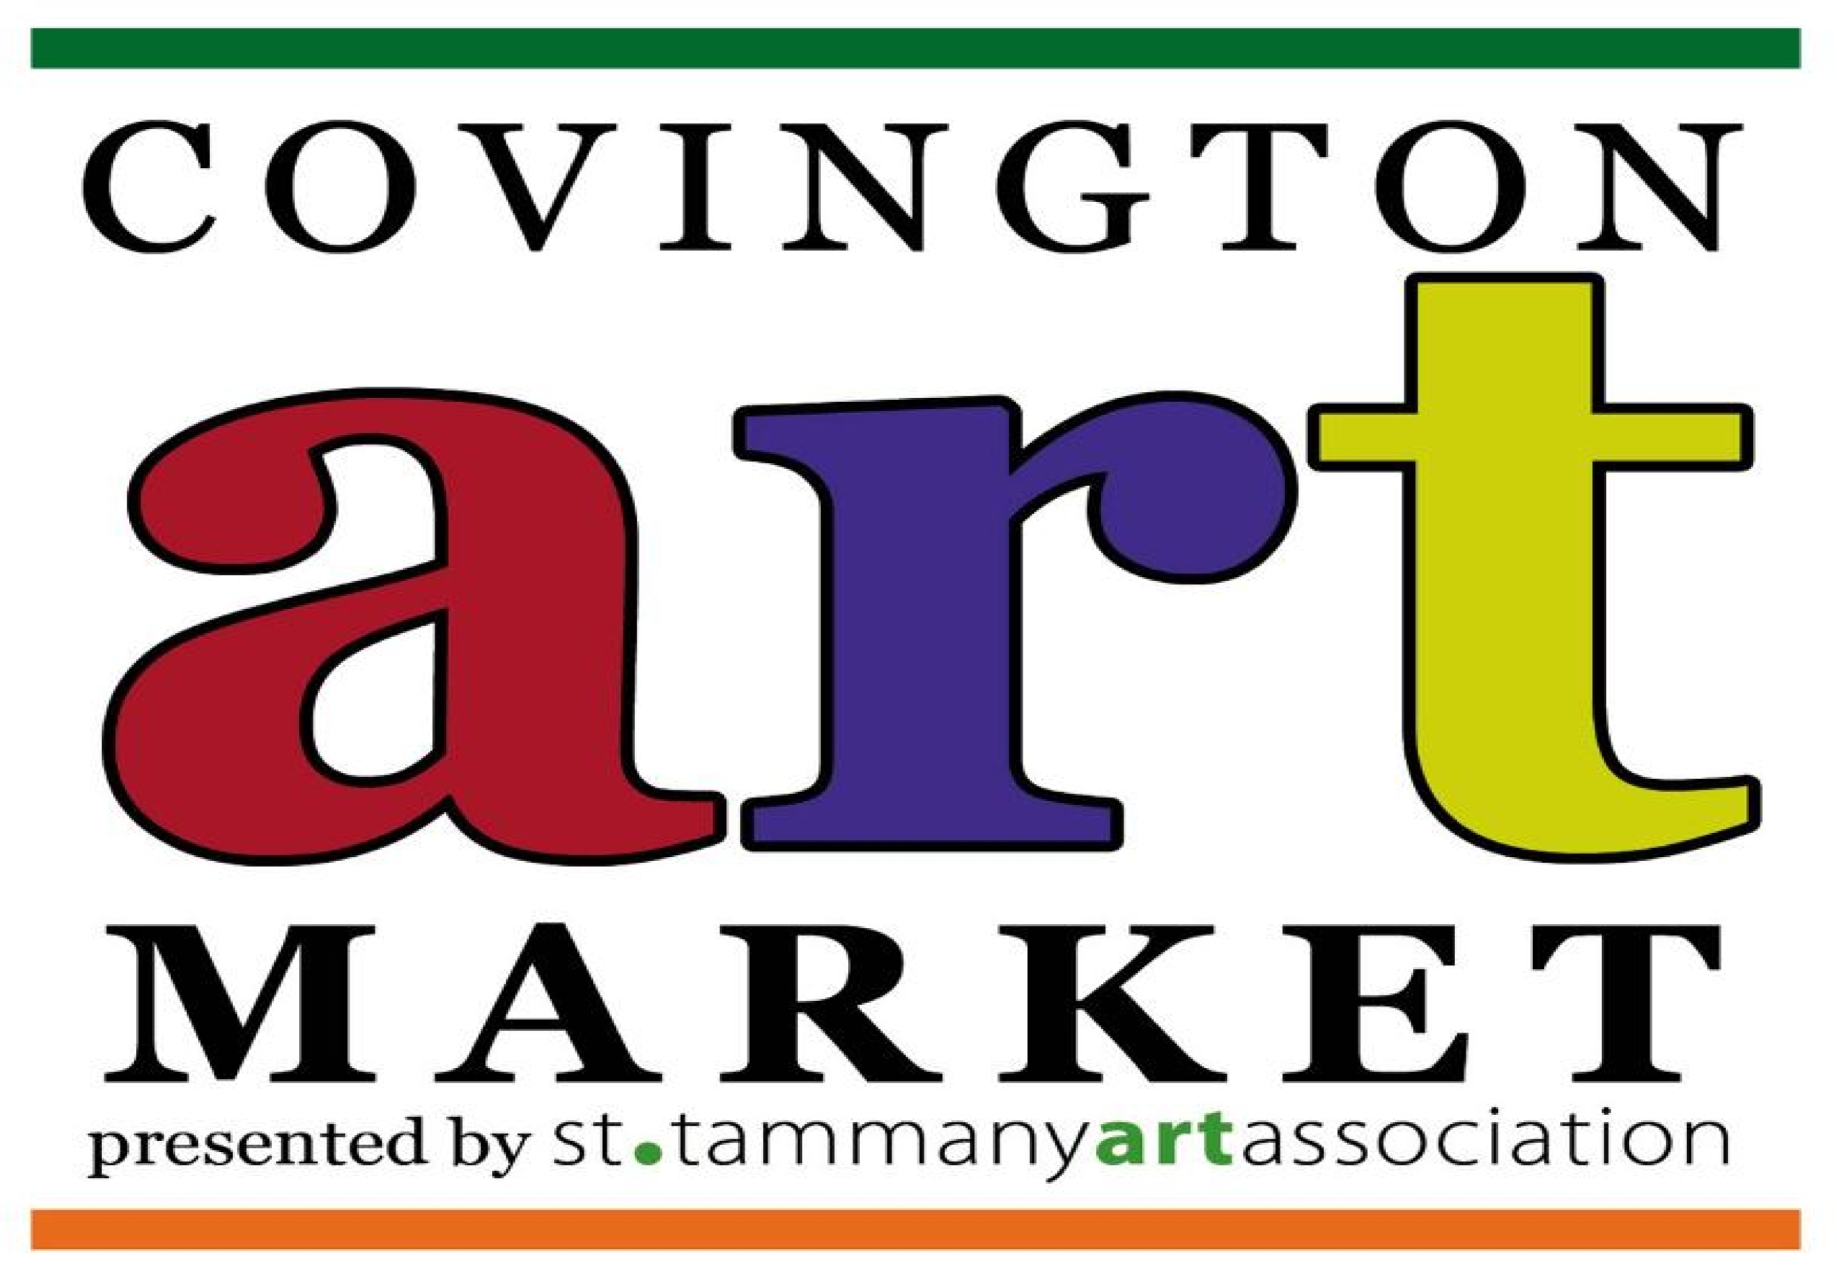 St. Tammany Art Association’s Covington Art Market Returns This Saturday